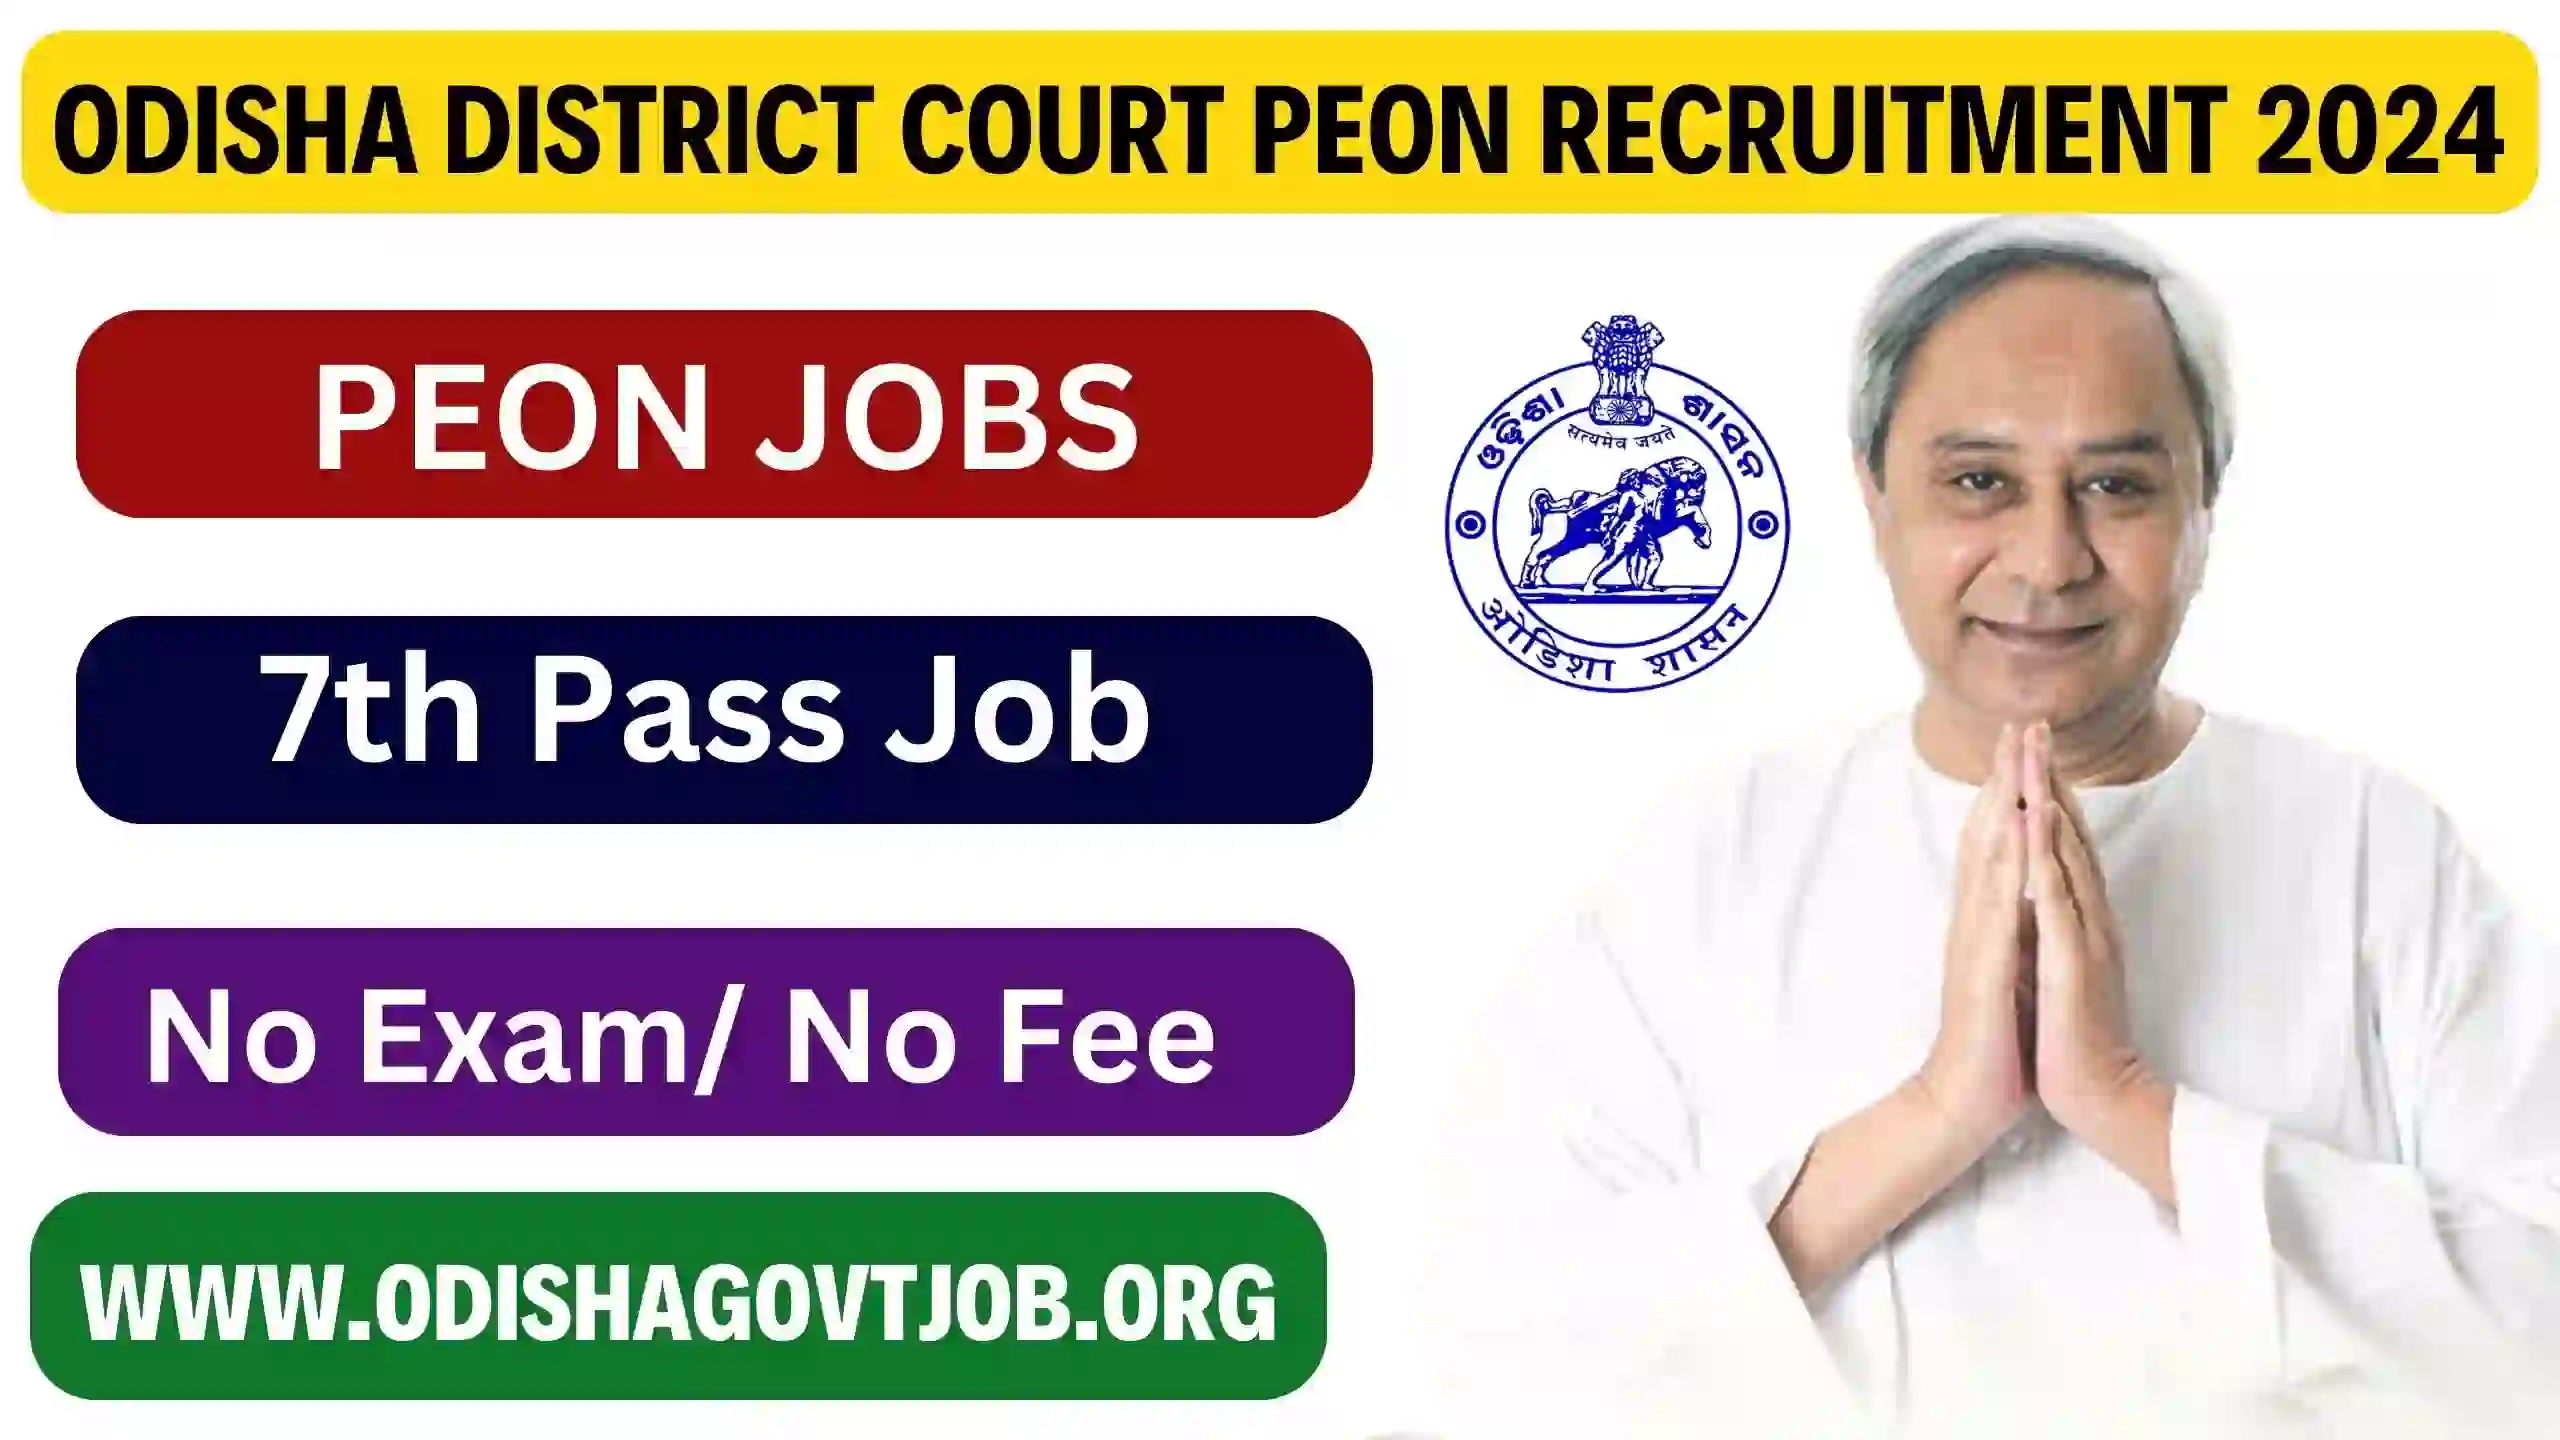 Odisha District Court Peon Recruitment 2024